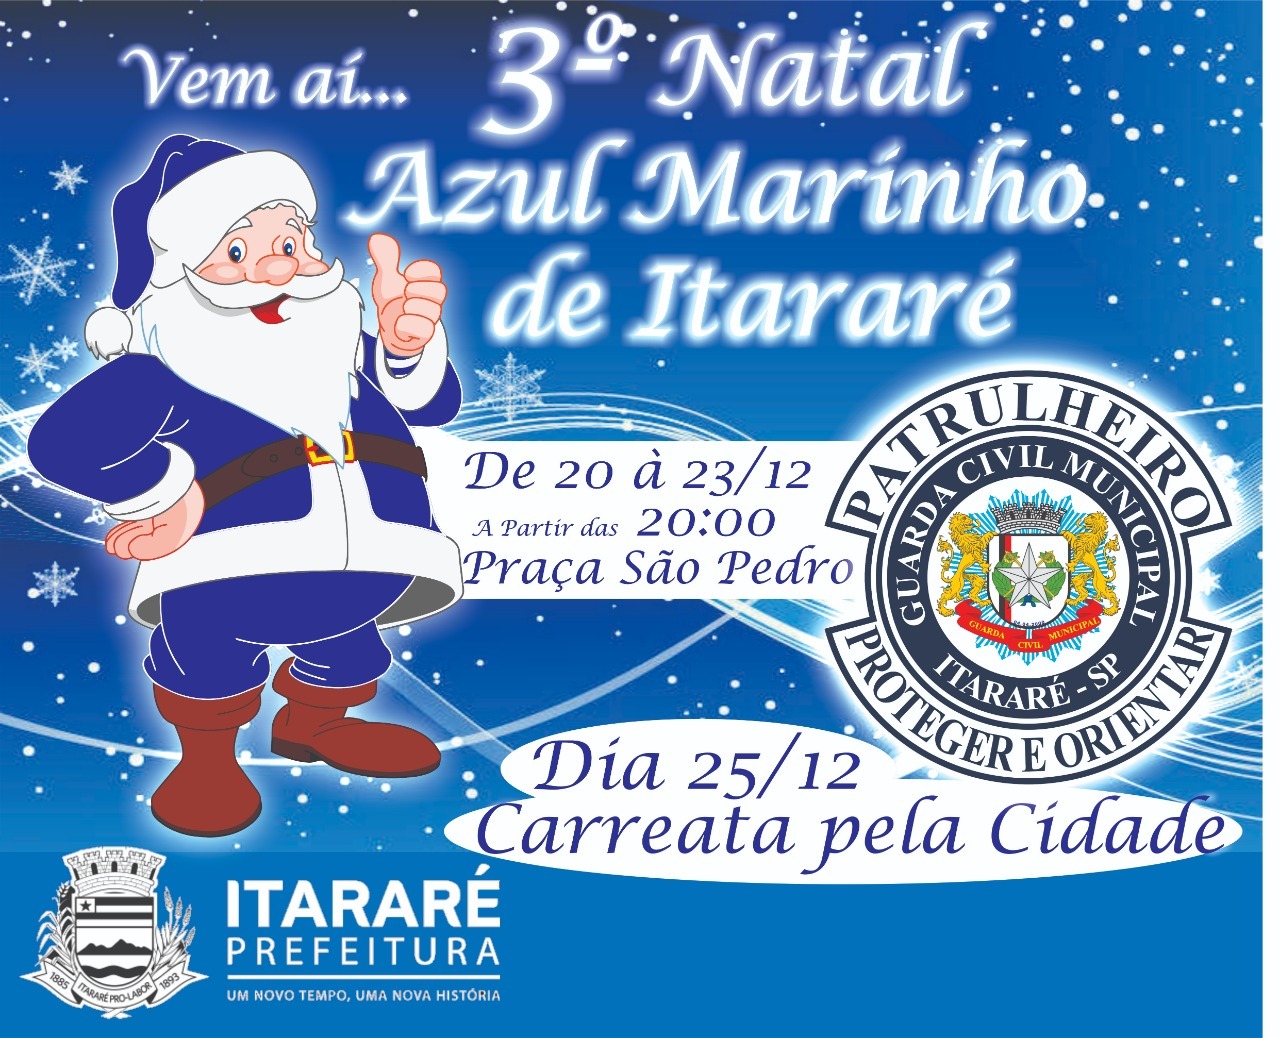 Papai Noel azul chega nesta sexta-feira (20) em Itararé (SP)